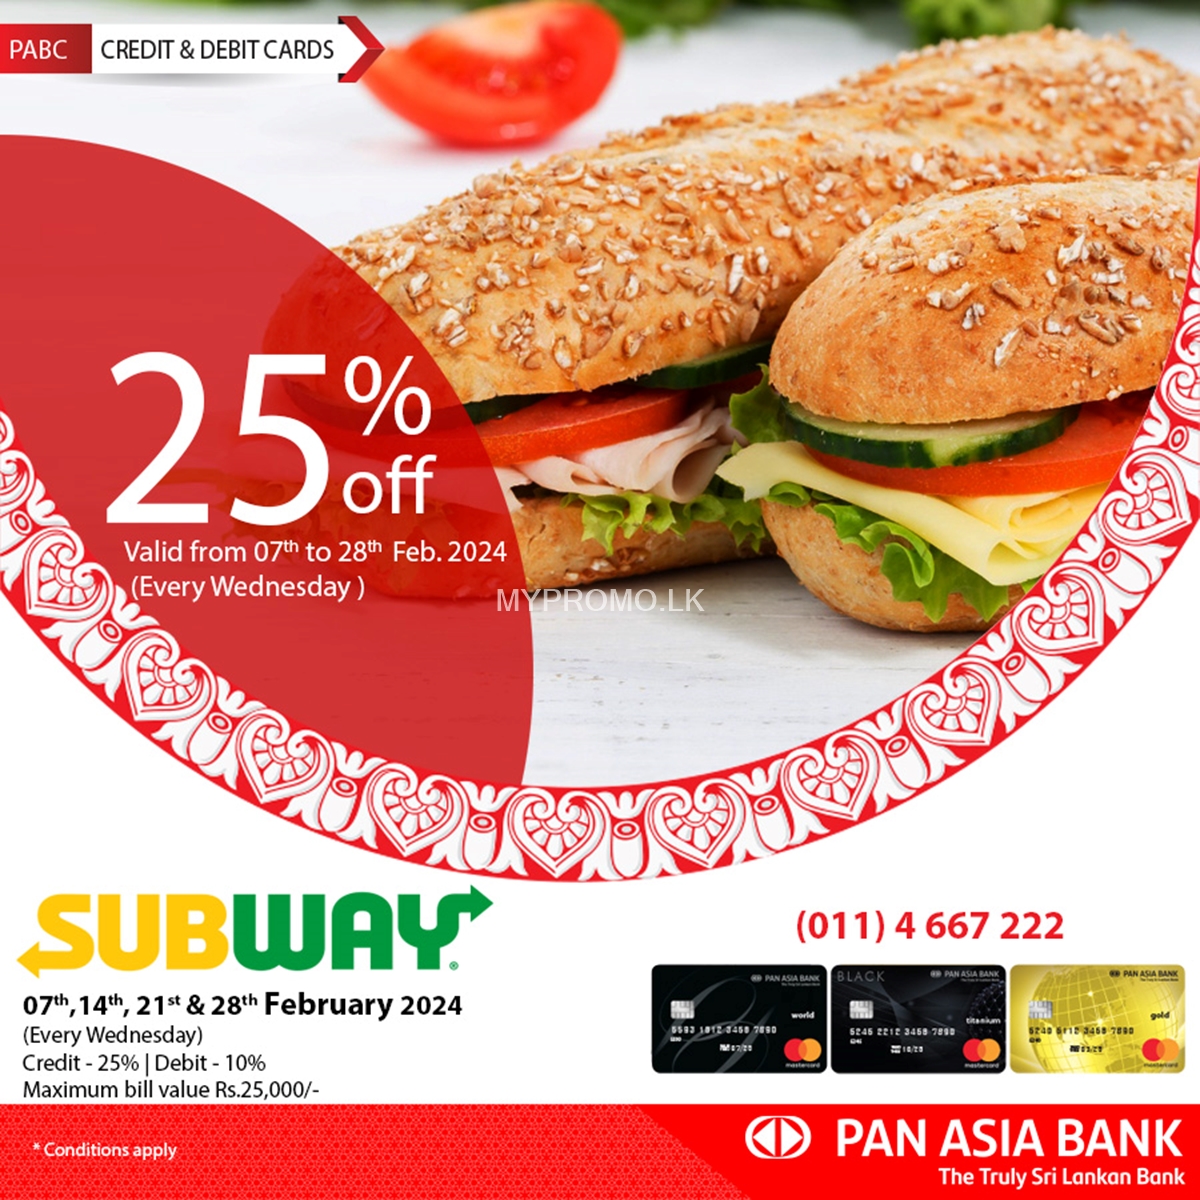 Get up to 25% off for pan Asia Bank Cards at Subway Sri Lanka